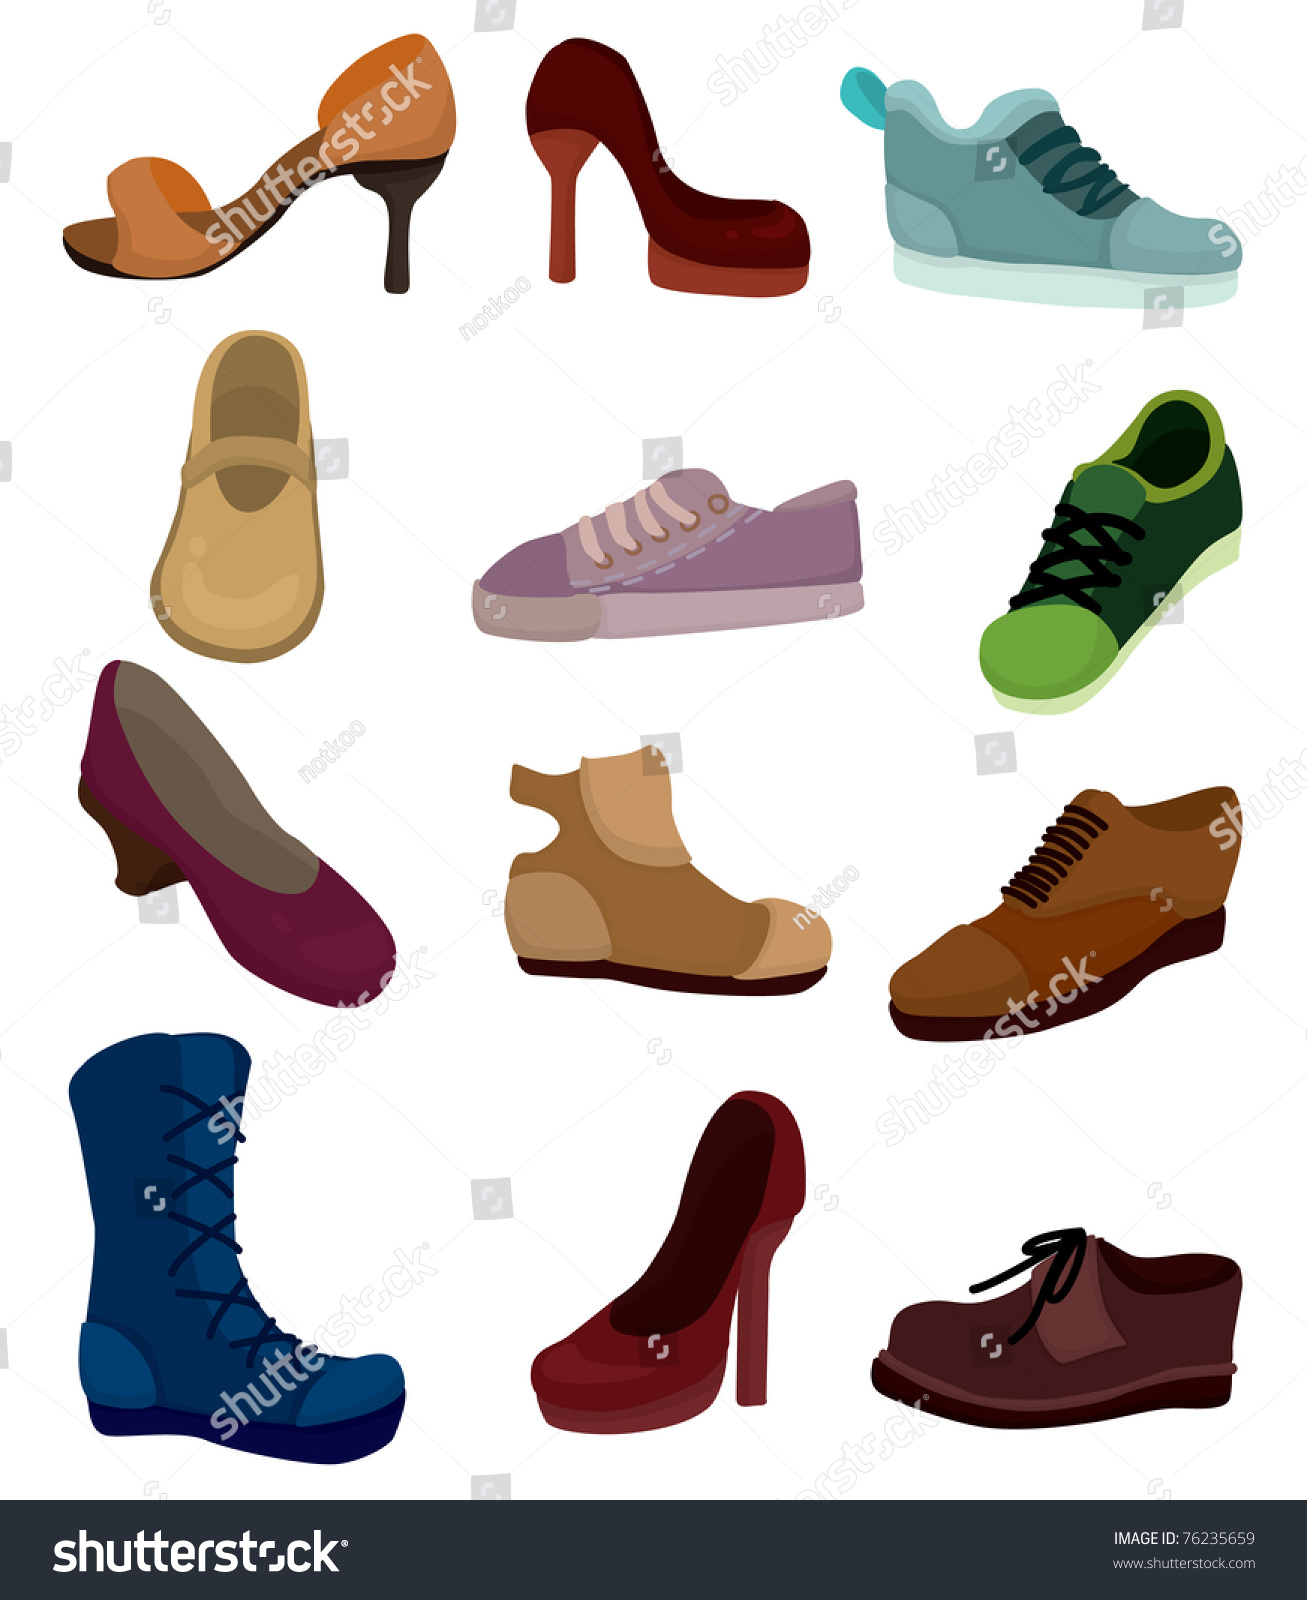 Cartoon Shoes Icon Stock Vector 76235659 : Shutterstock